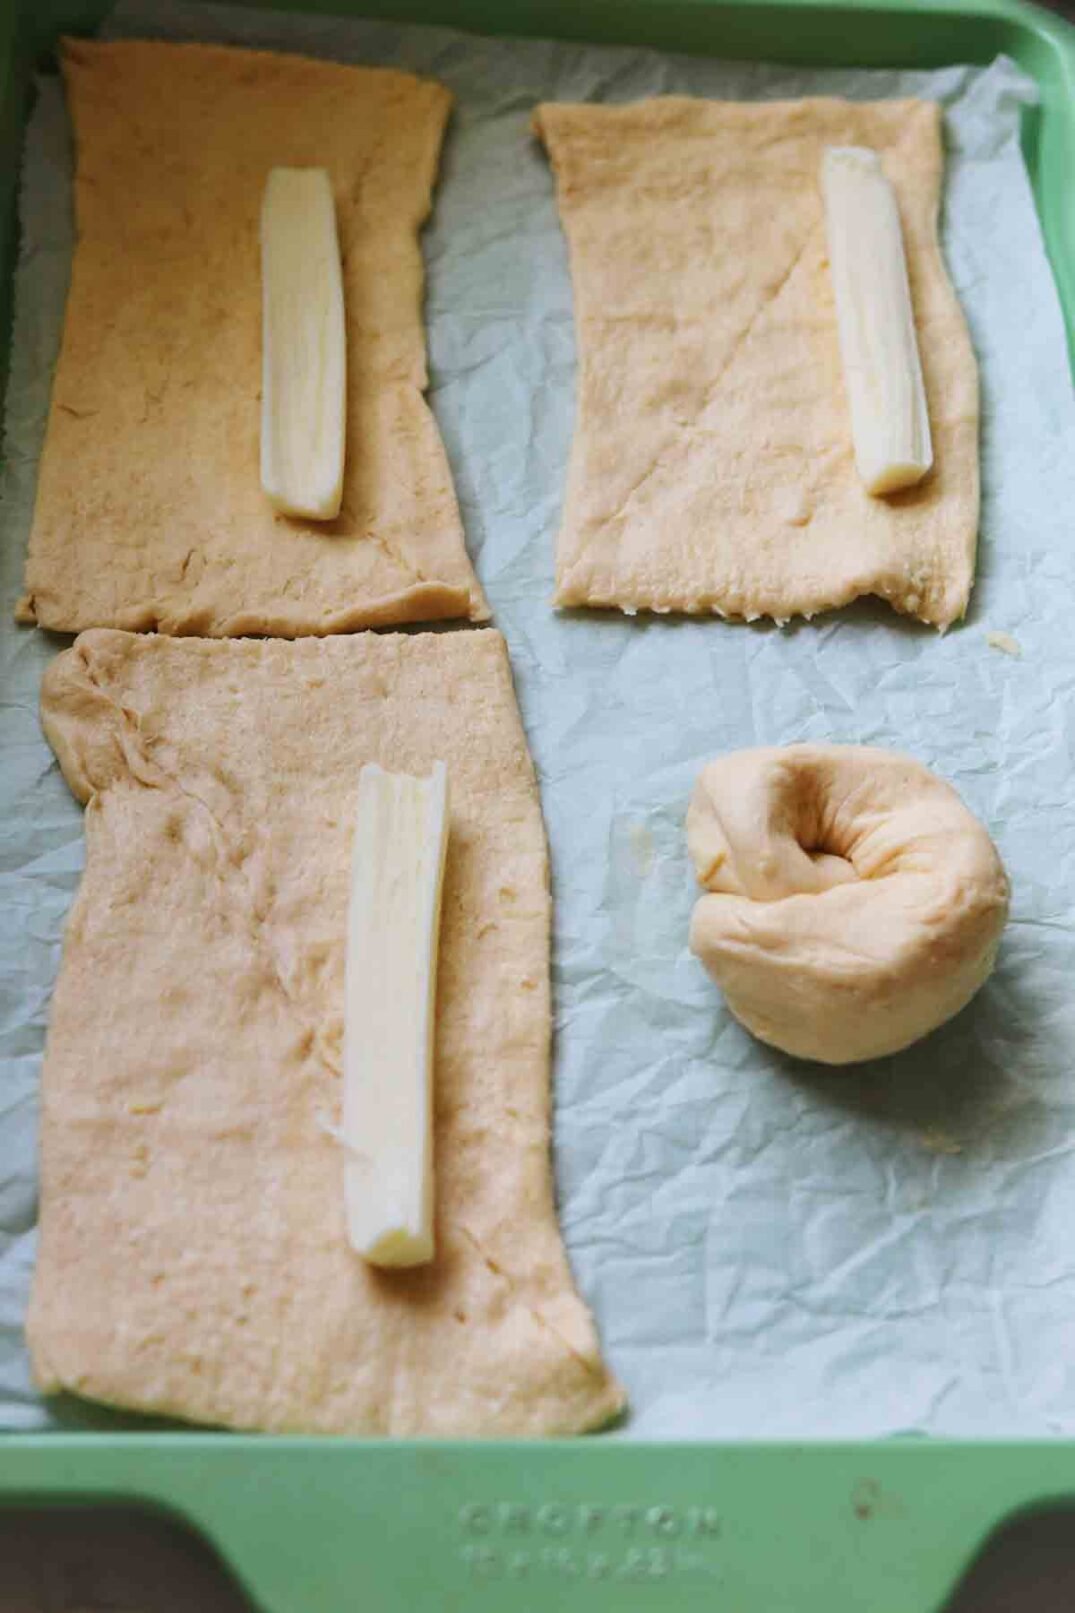 crescent dough rectangles on a baking sheet with a mozzarella stick on top.